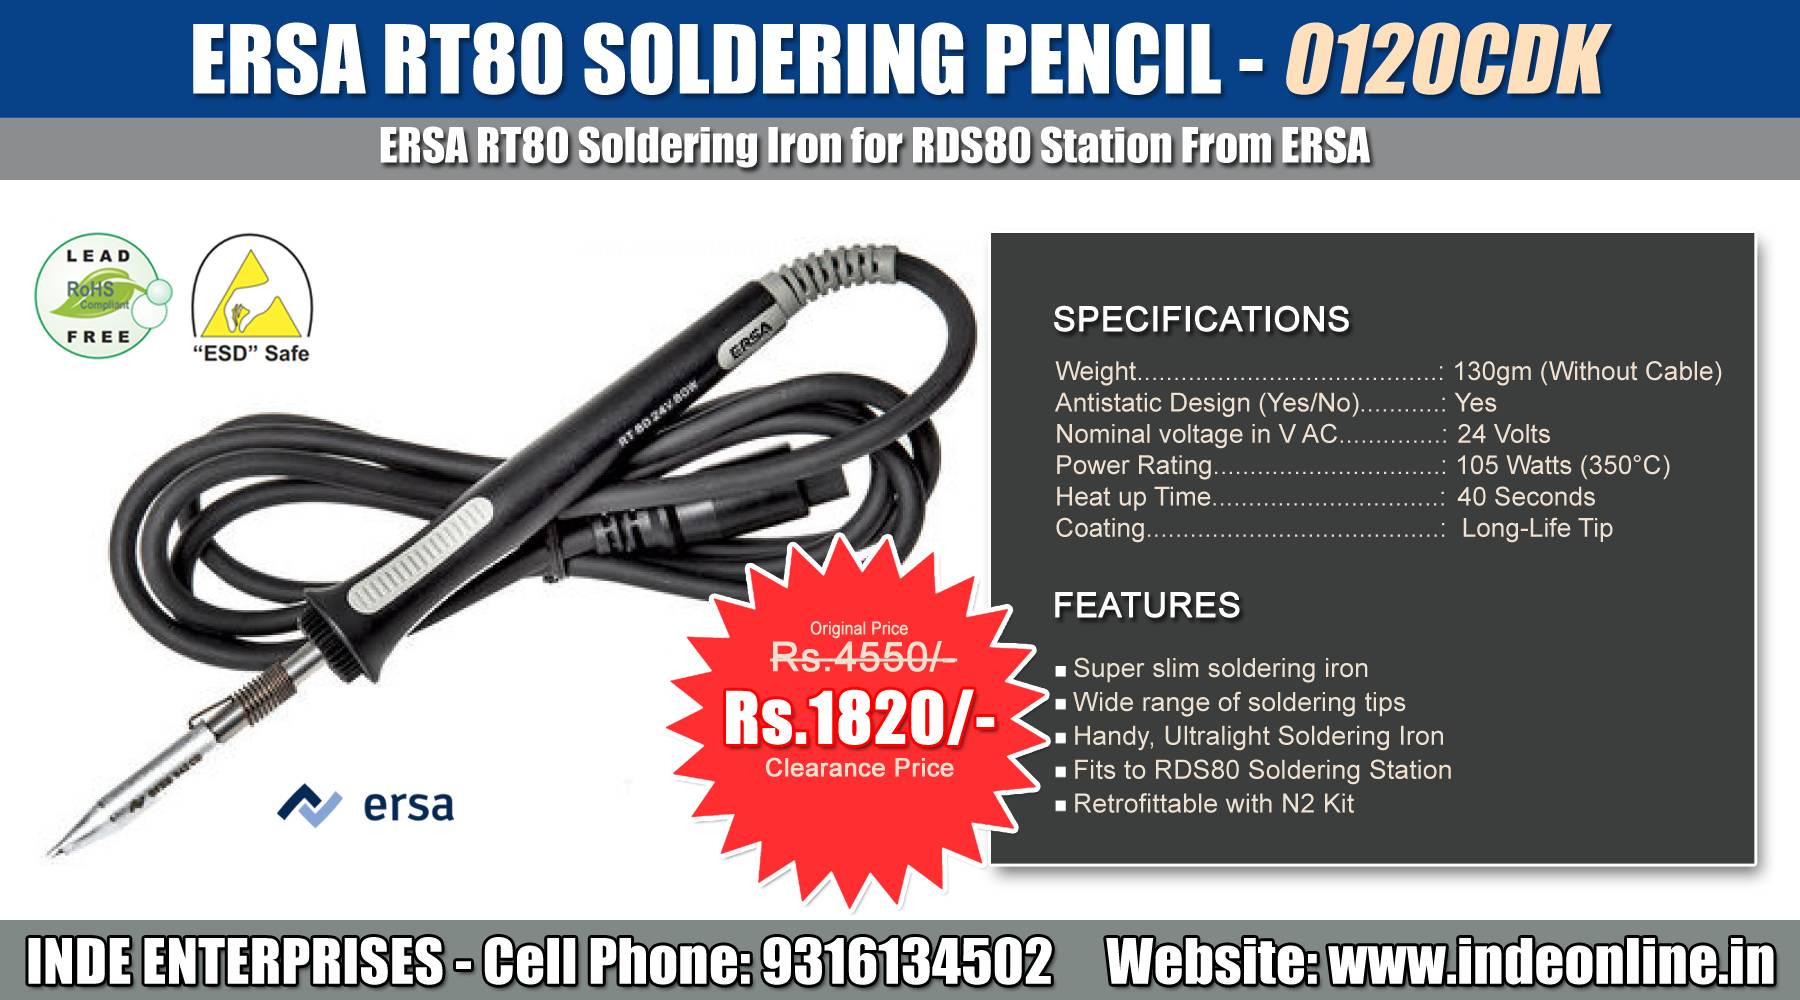 ERSA Soldering Iron - RT80 Price Rs.1820/-